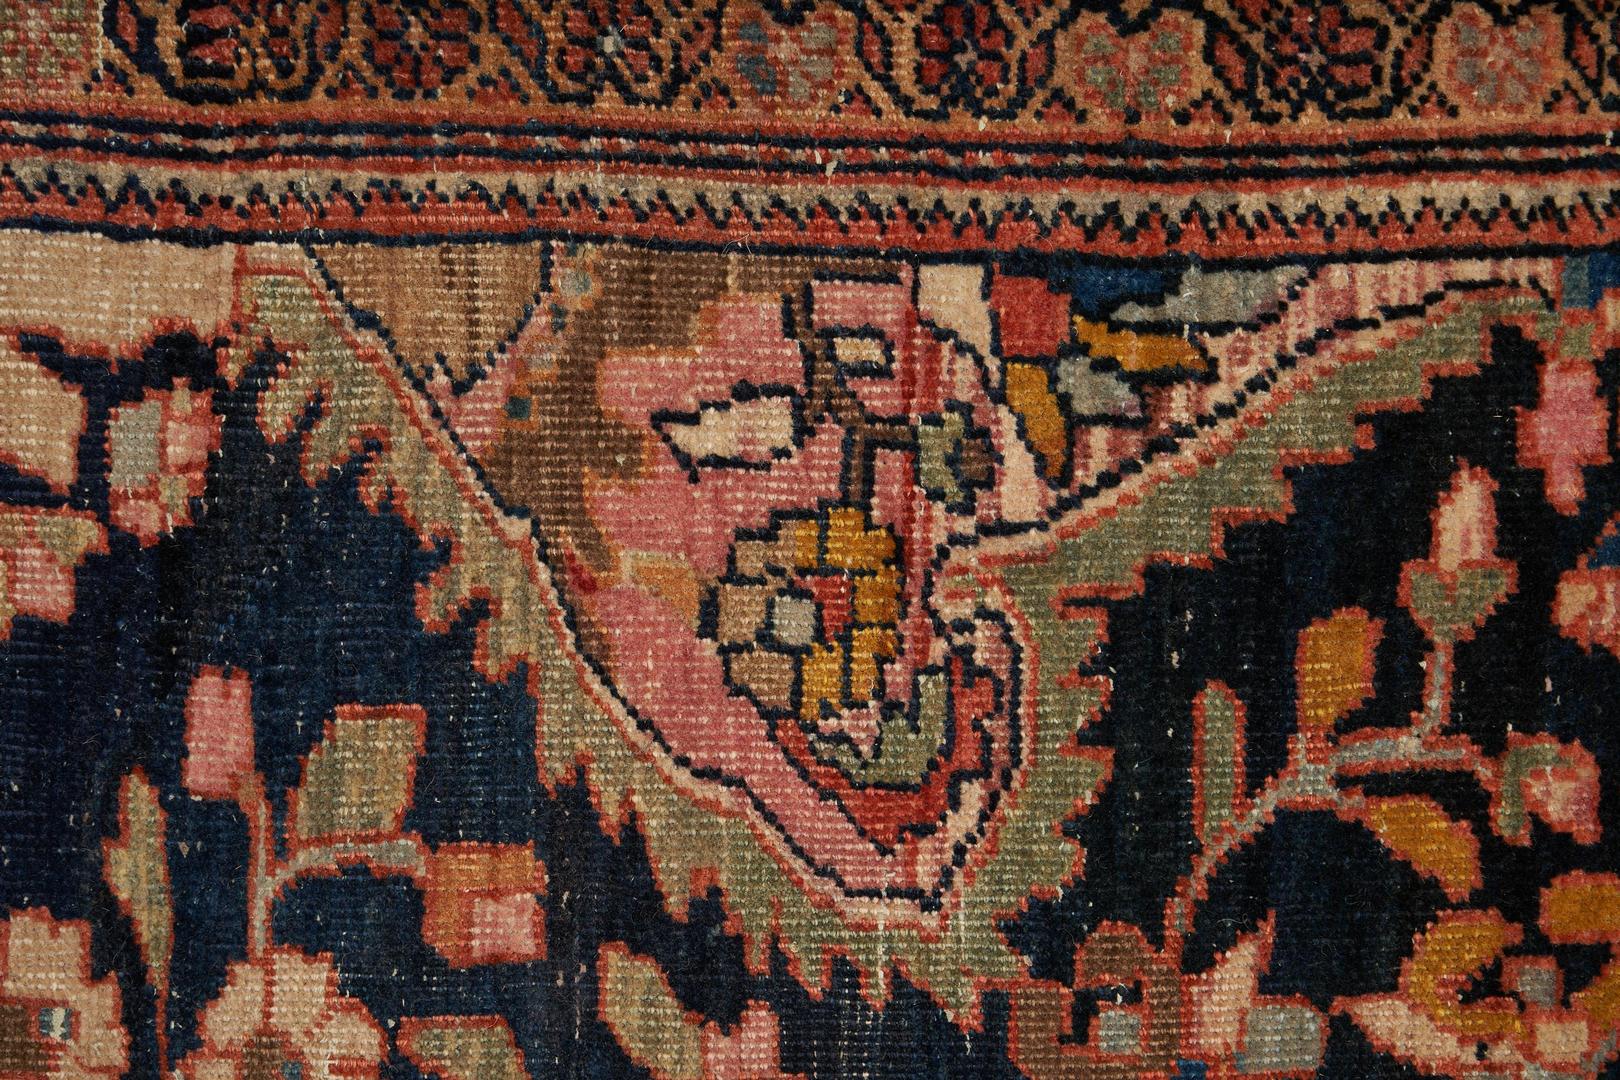 Lot 487: Antique Persian Sarouk Rug or Carpet, 13' x 10'